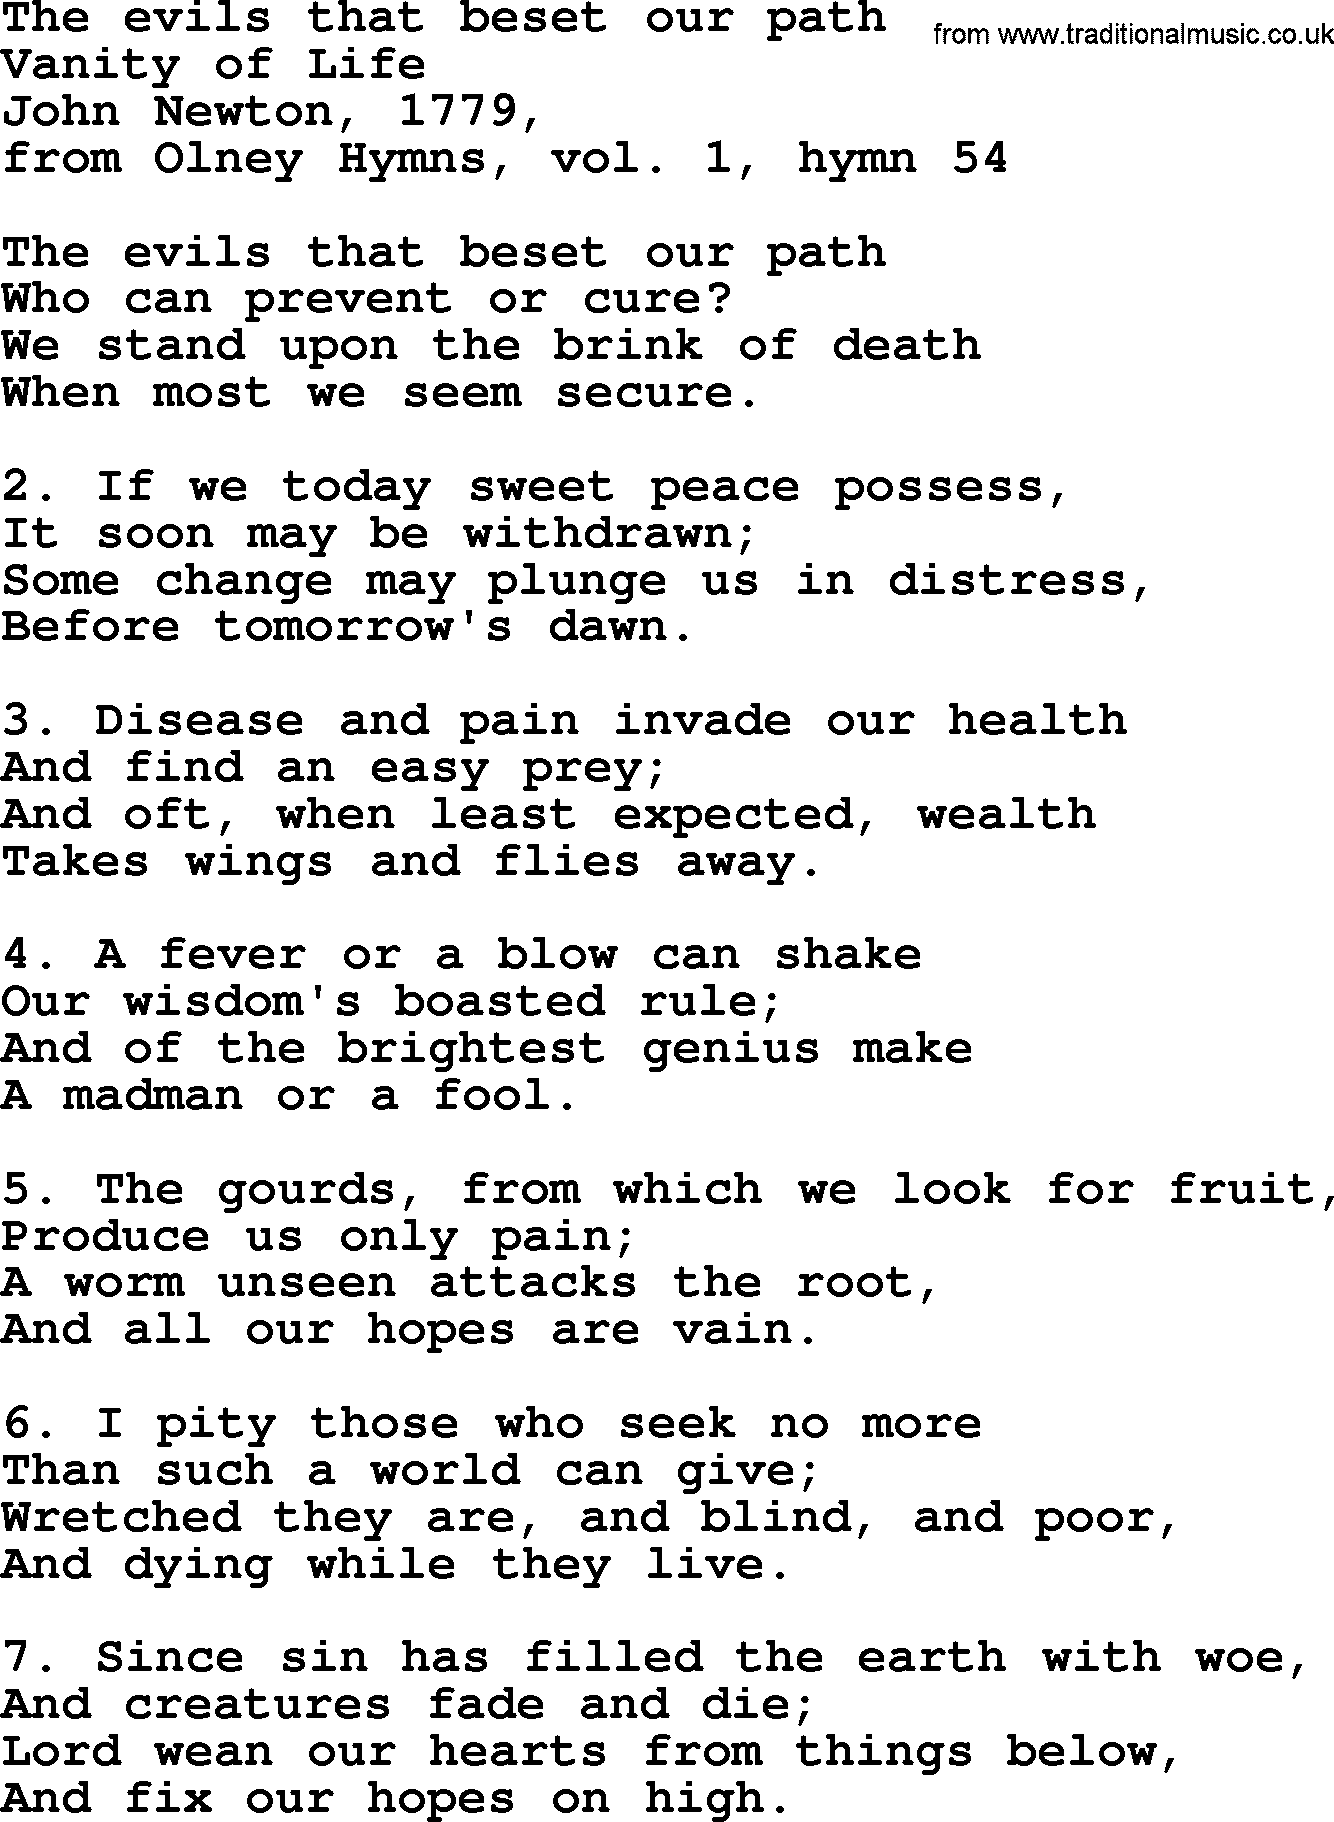 John Newton hymn: The Evils That Beset Our Path, lyrics